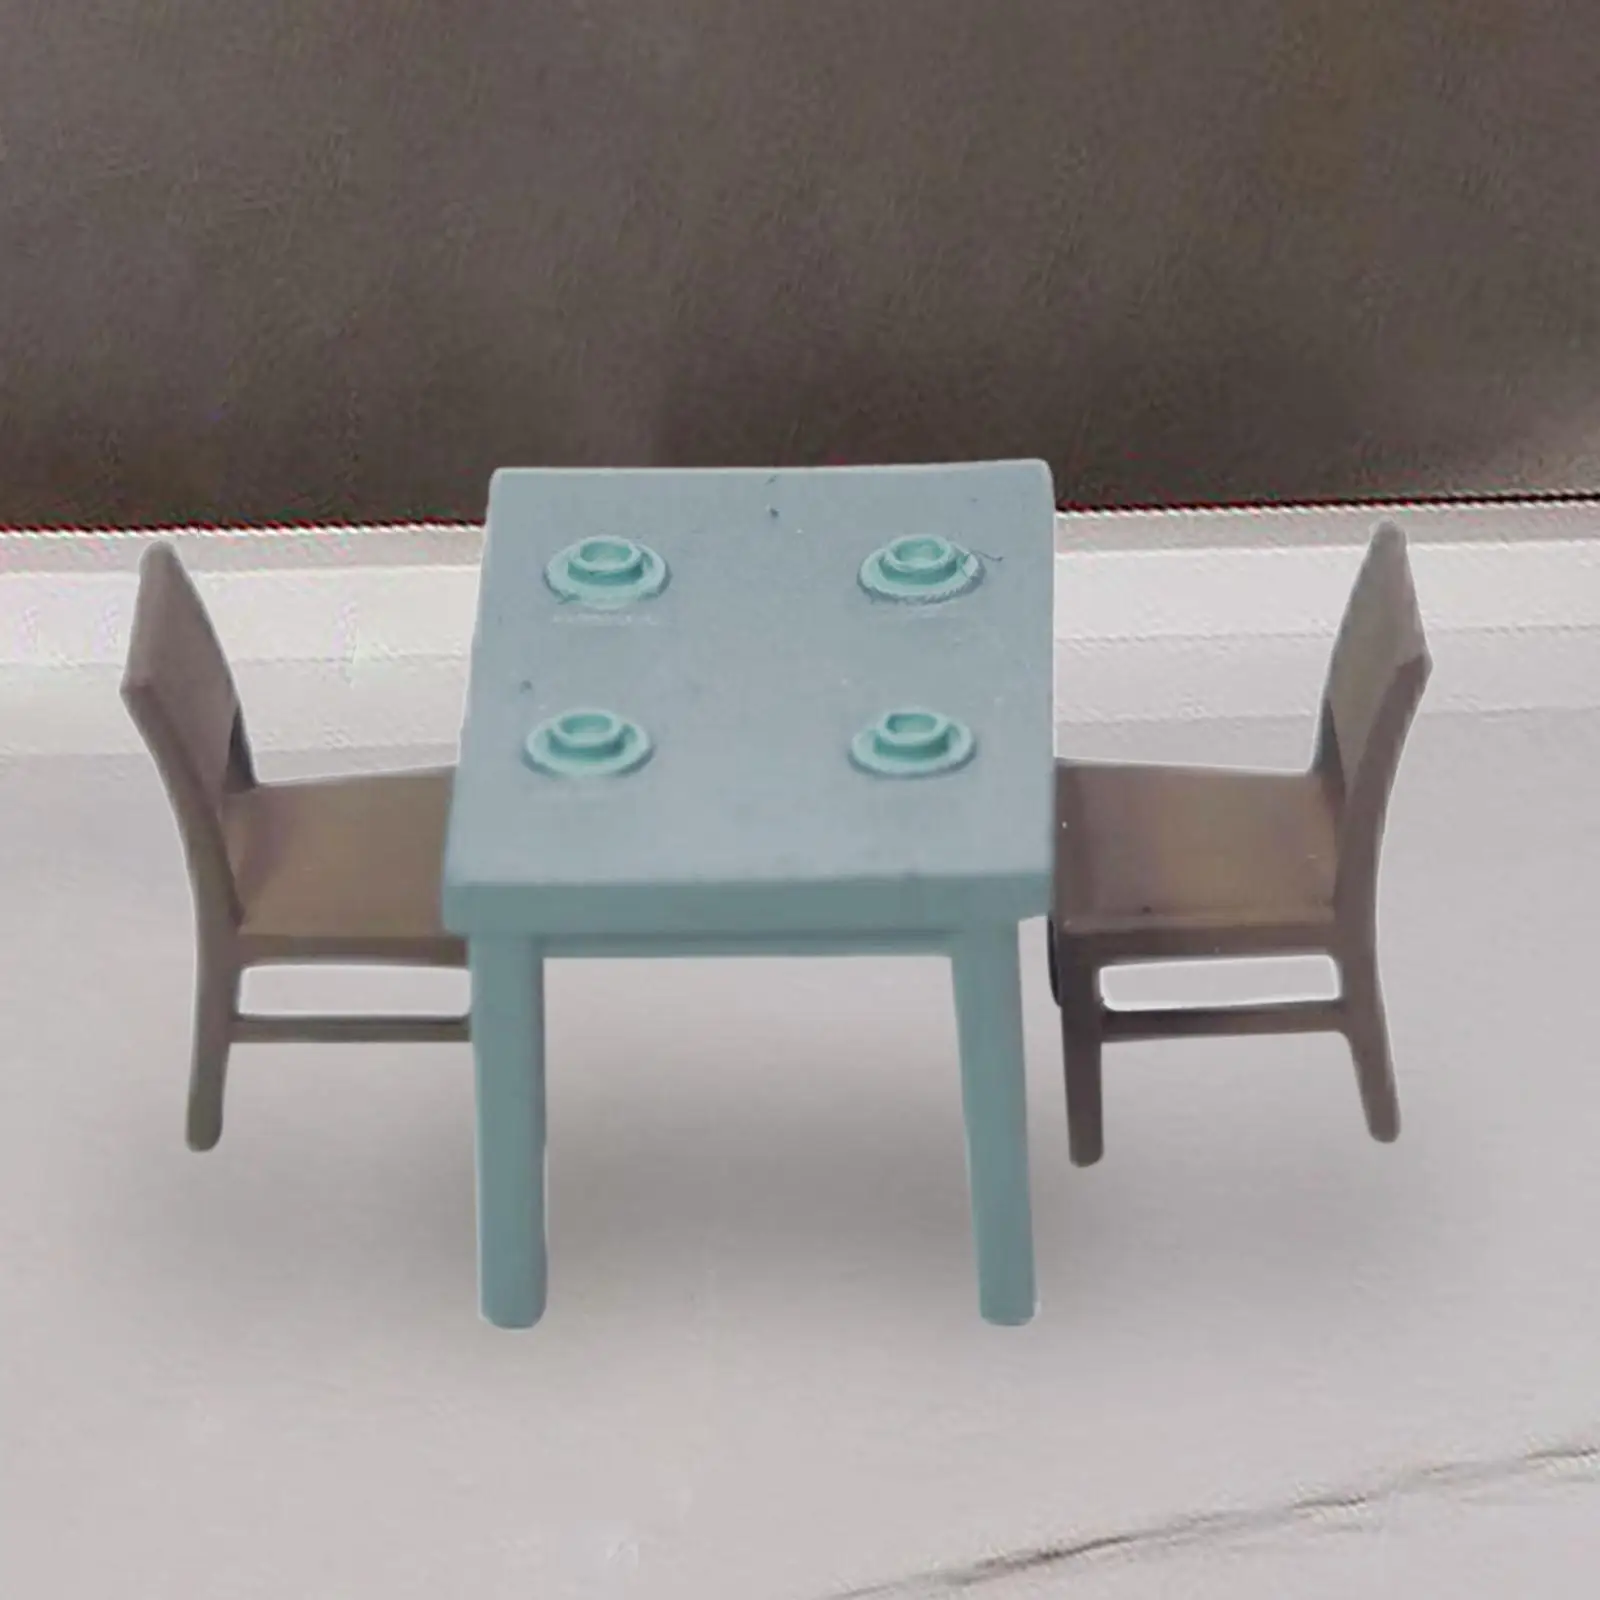 3 Pieces 1:87 HO Scale Furniture Model Photo Props Miniatures Furniture Set